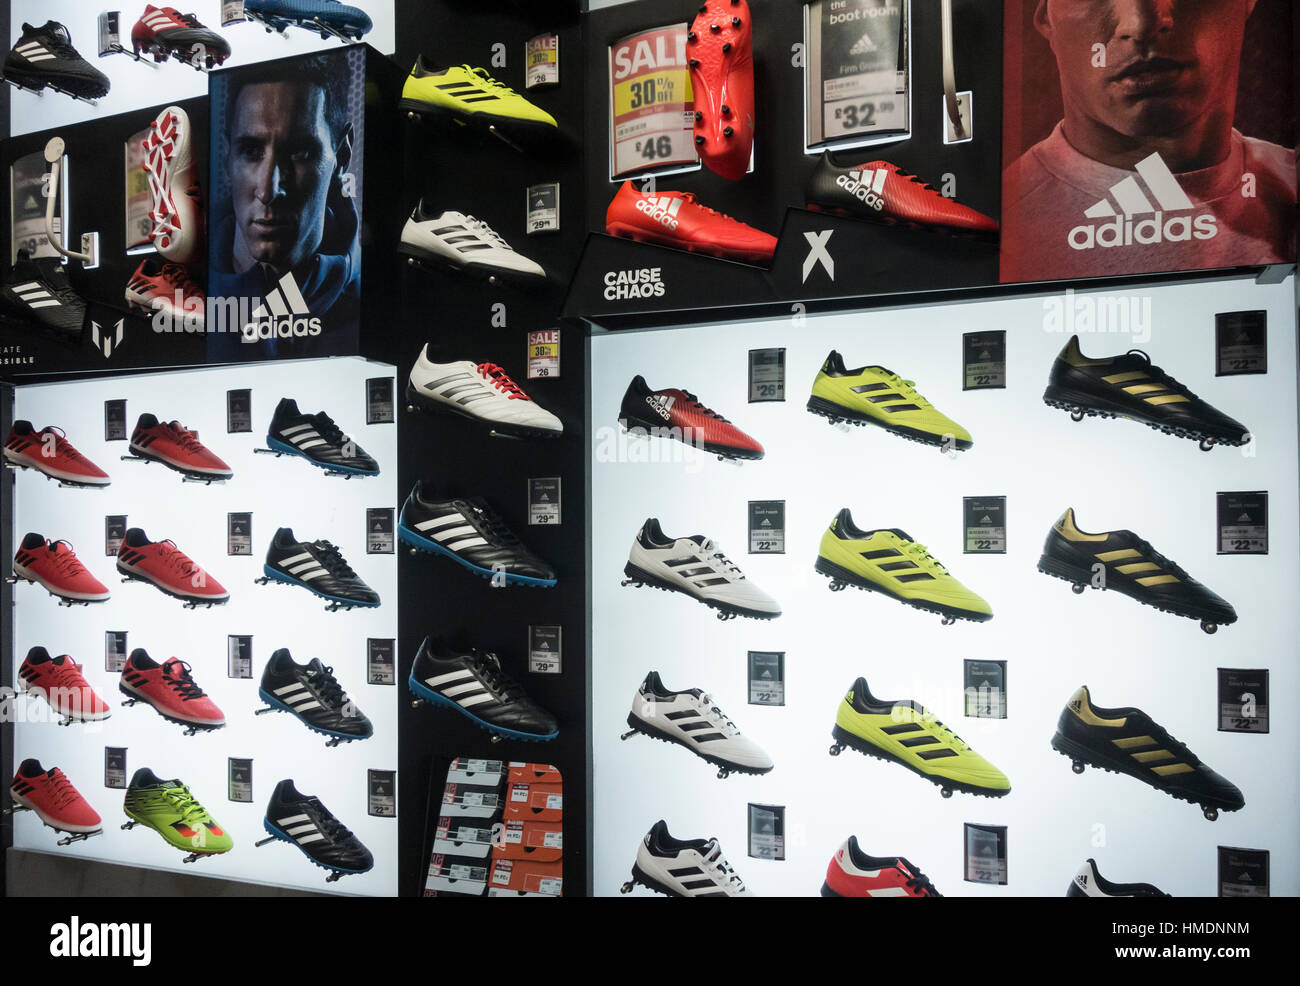 adidas football boots sale